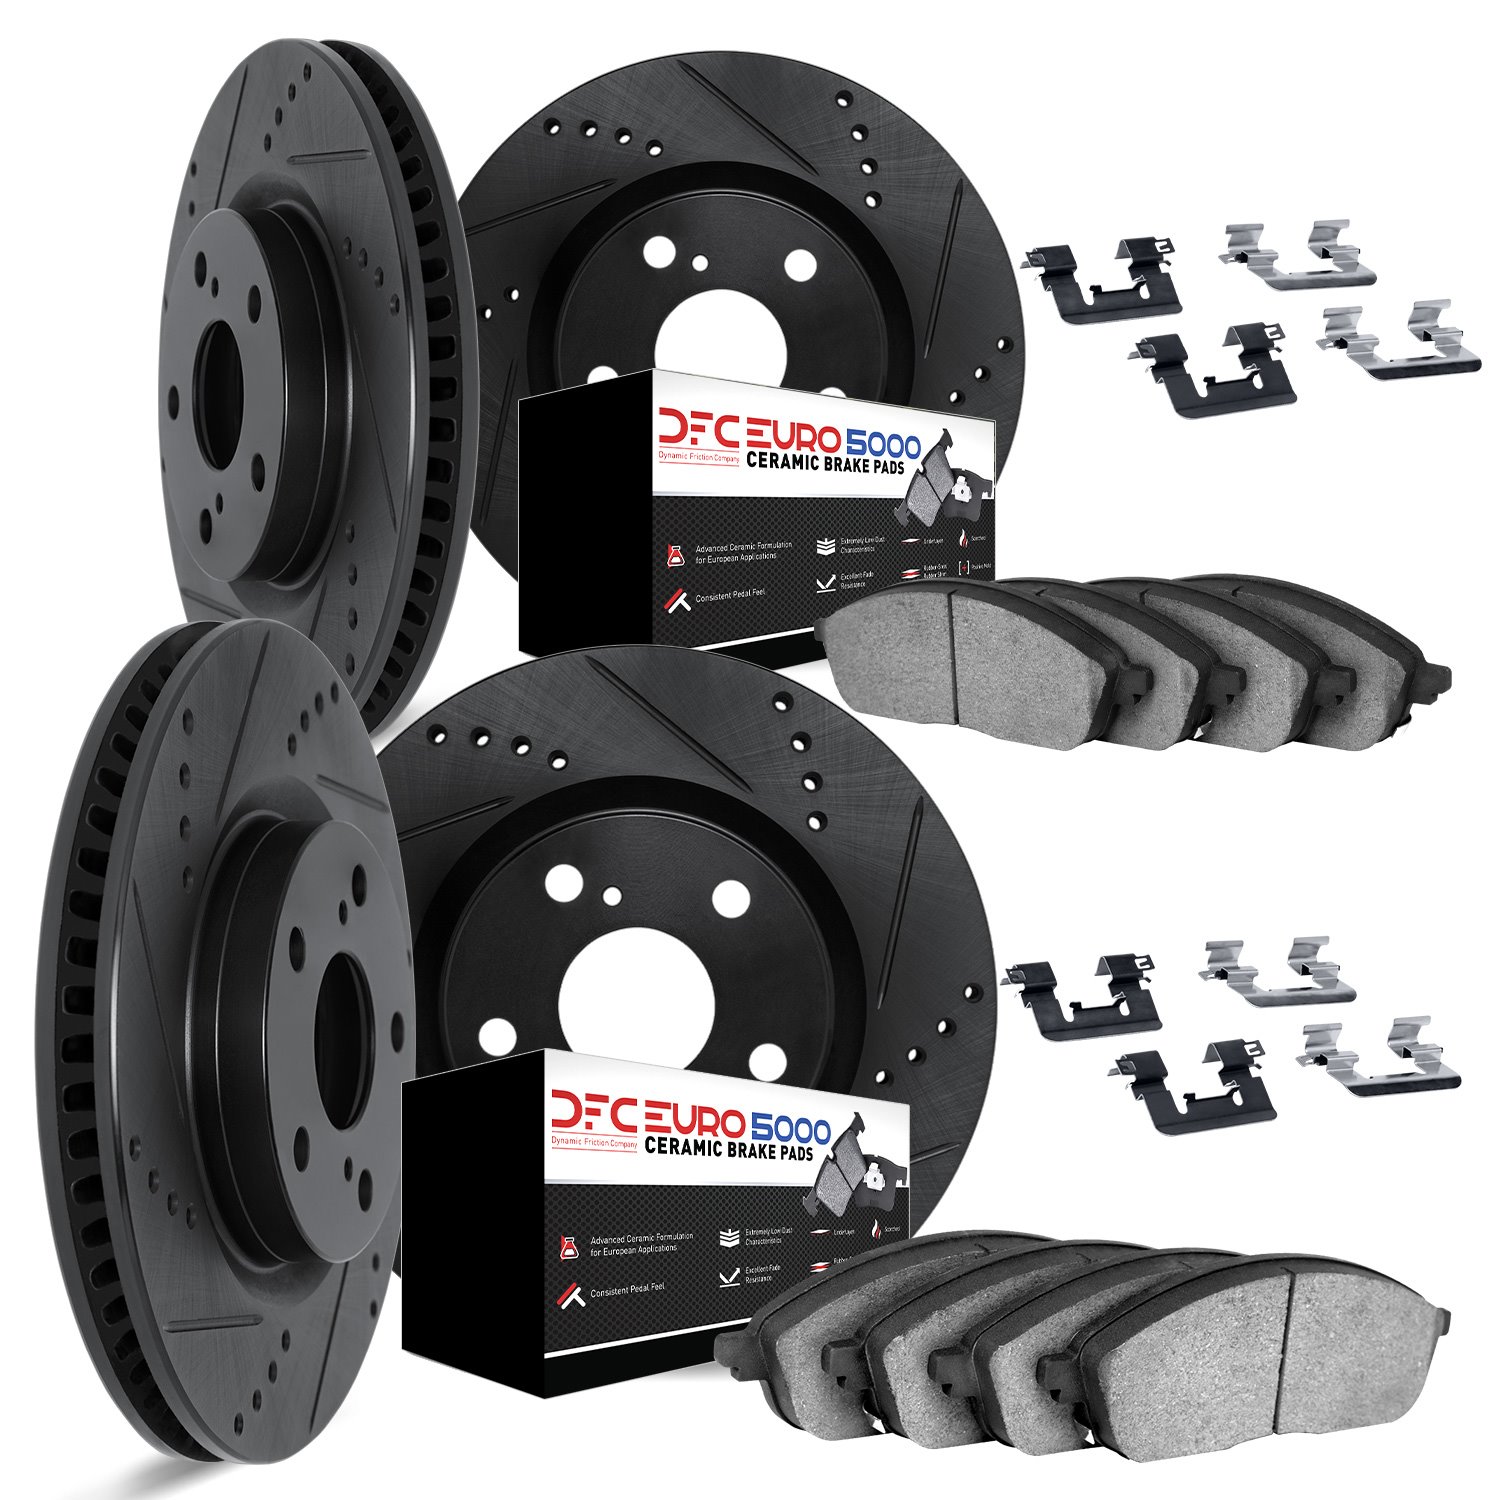 8614-31024 Drilled/Slotted Brake Rotors w/5000 Euro Ceramic Brake Pads Kit & Hardware [Black], 2007-2015 BMW, Position: Front an